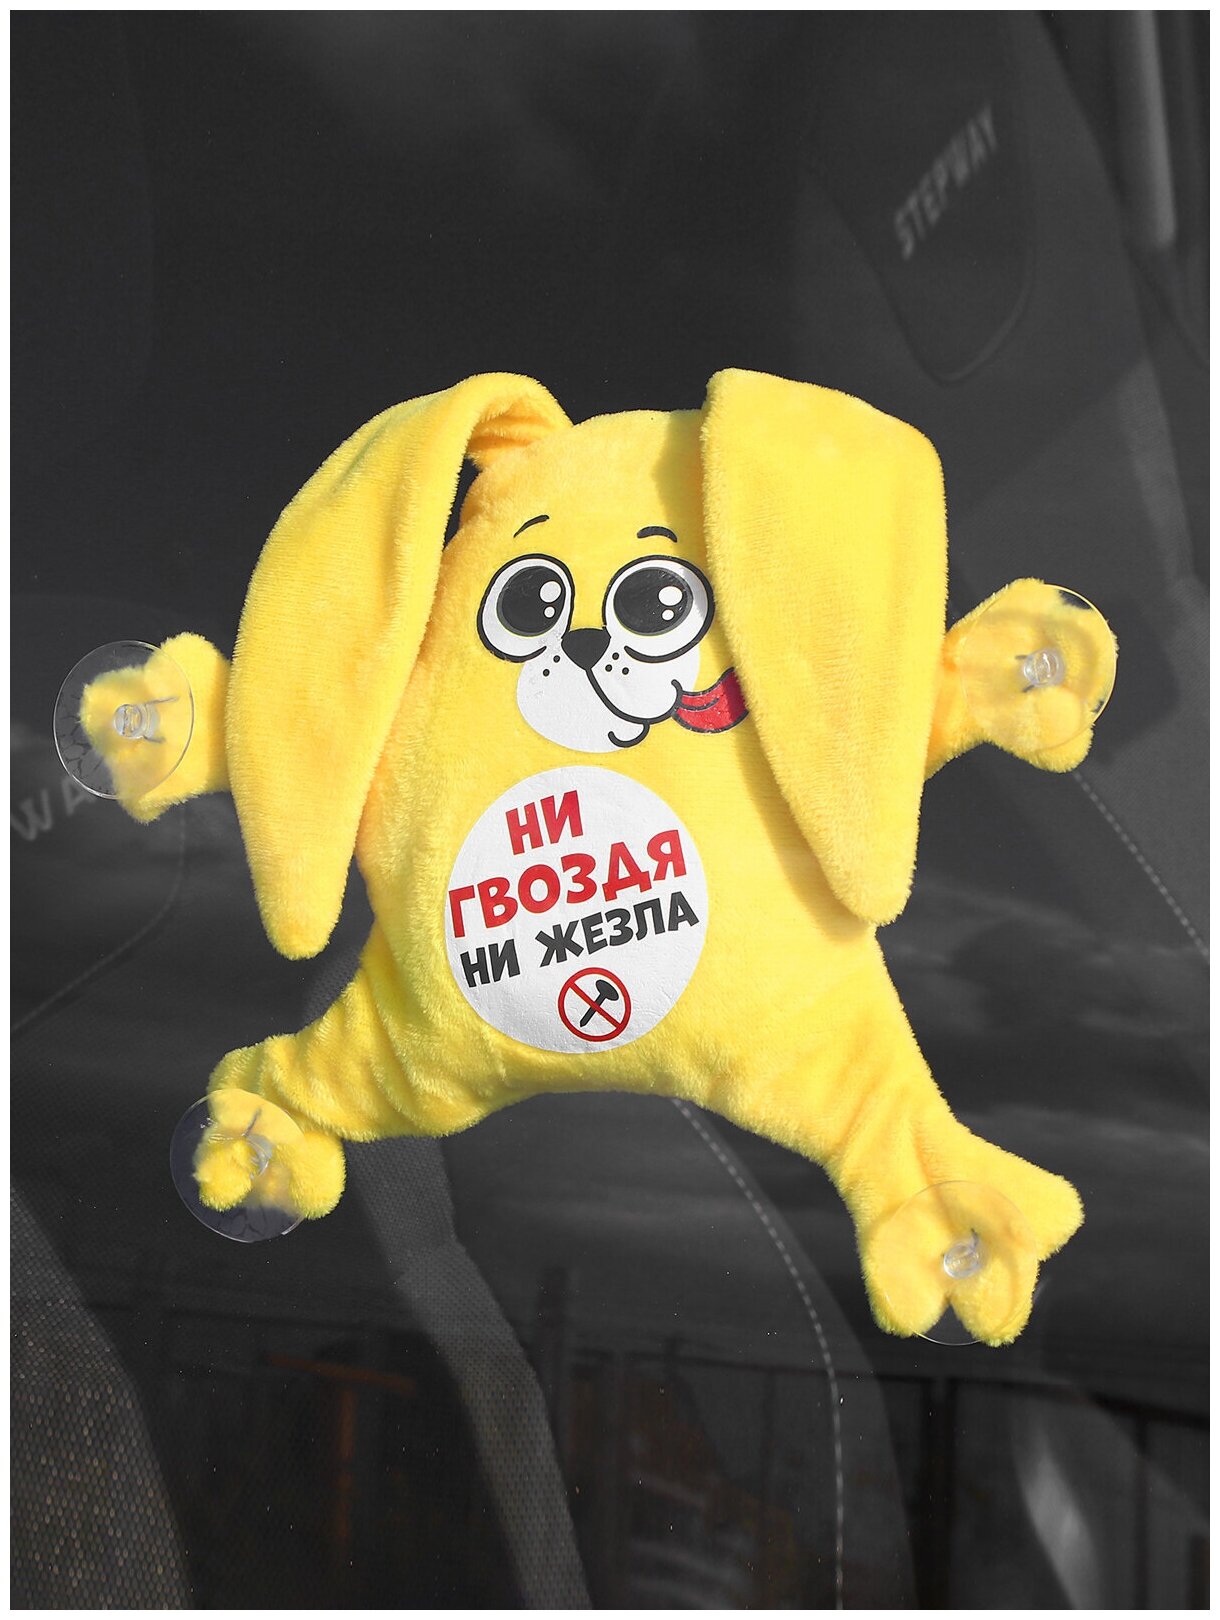 Milo toys Автоигрушка на присосках «Ни гвоздя ни жезла» зайка